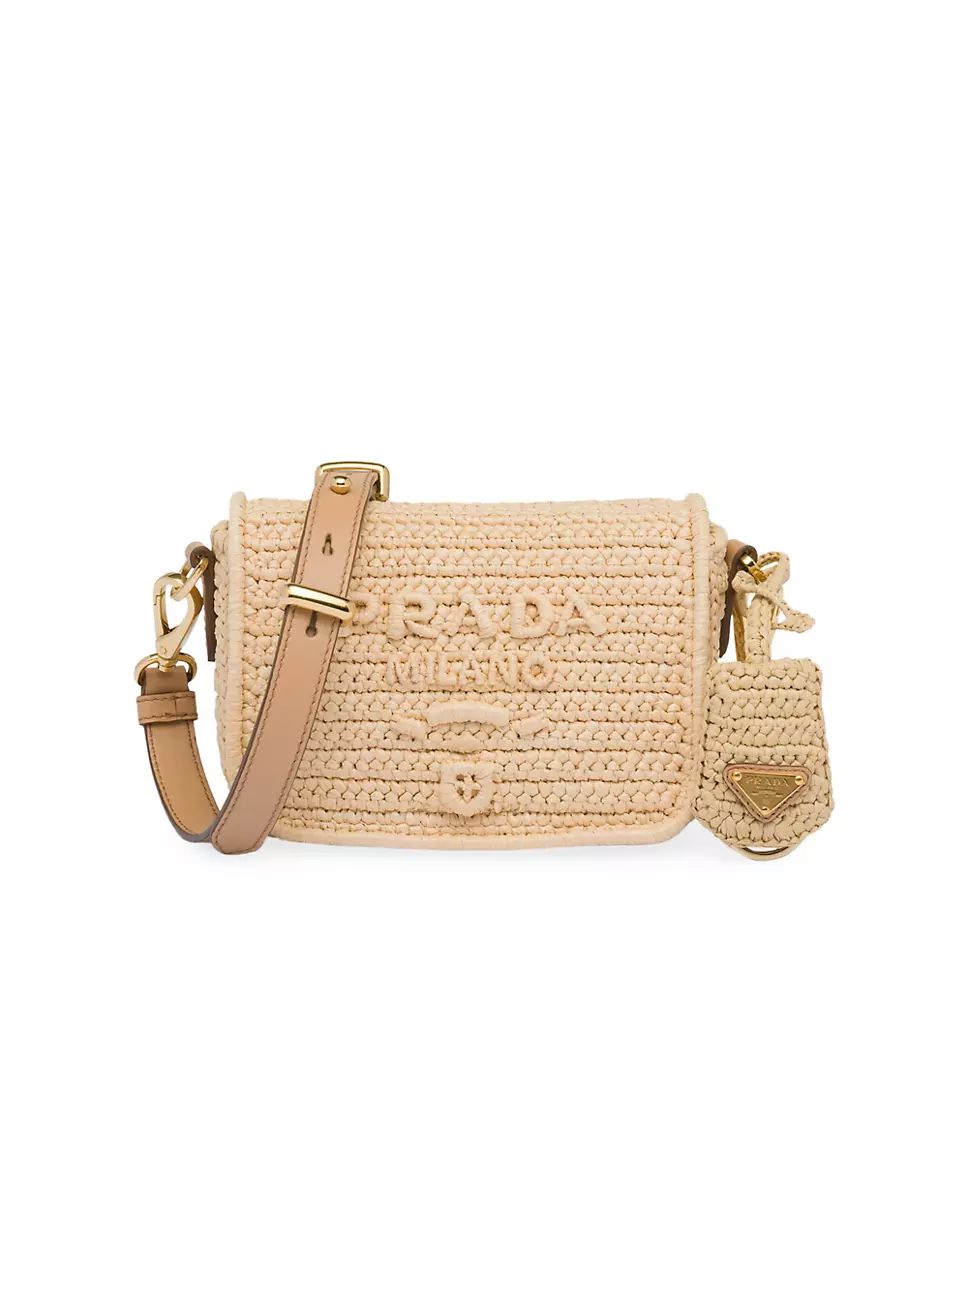 Prada Raffia And Leather Shoulder Bag | Saks Fifth Avenue